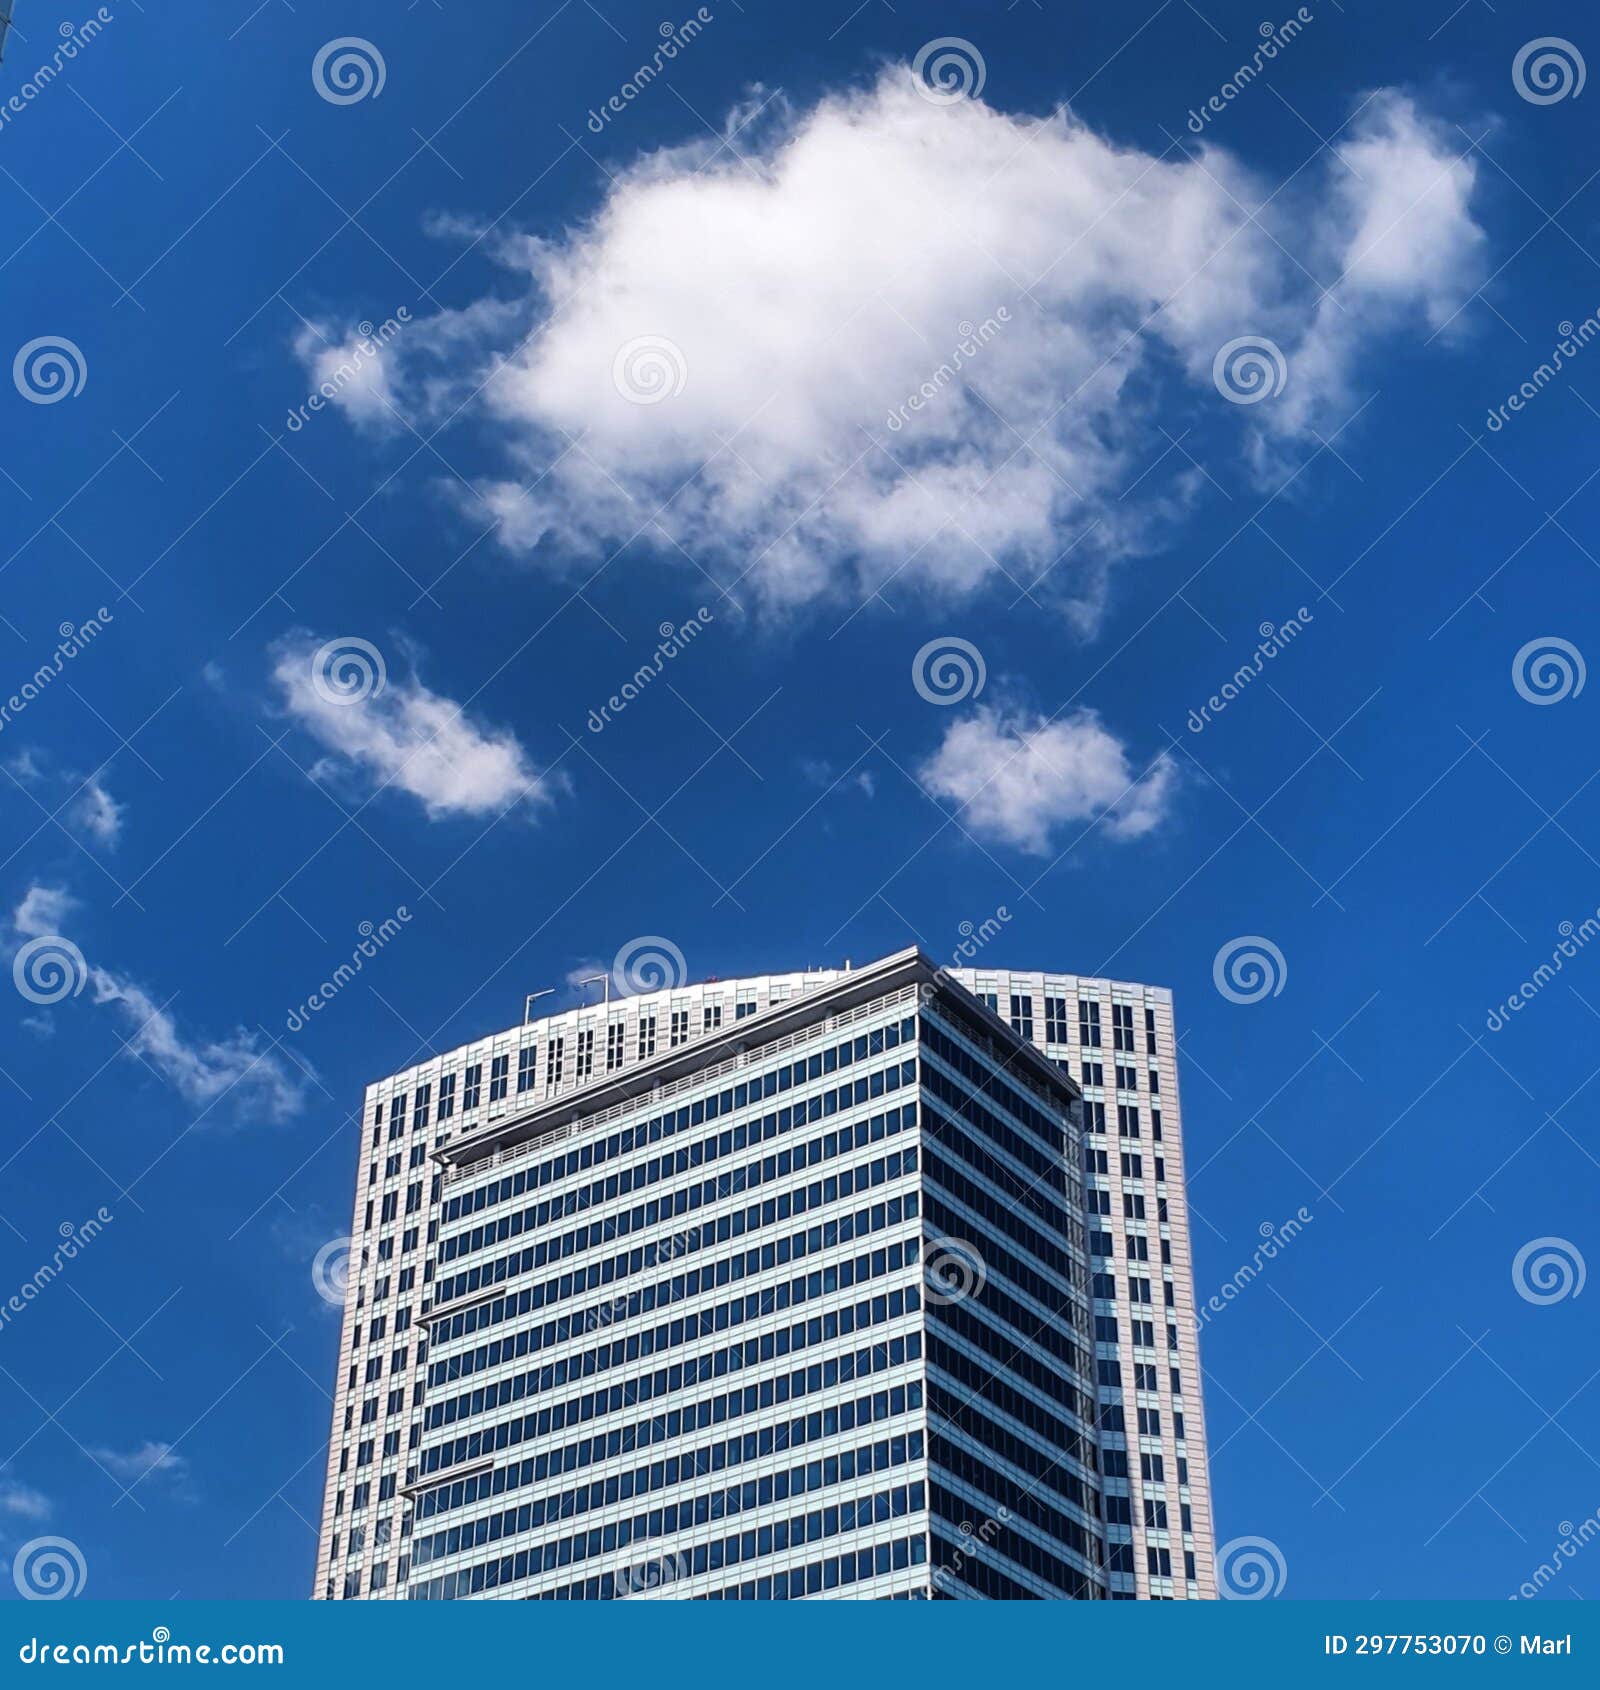 cloud and blue sky over skyscrapper top